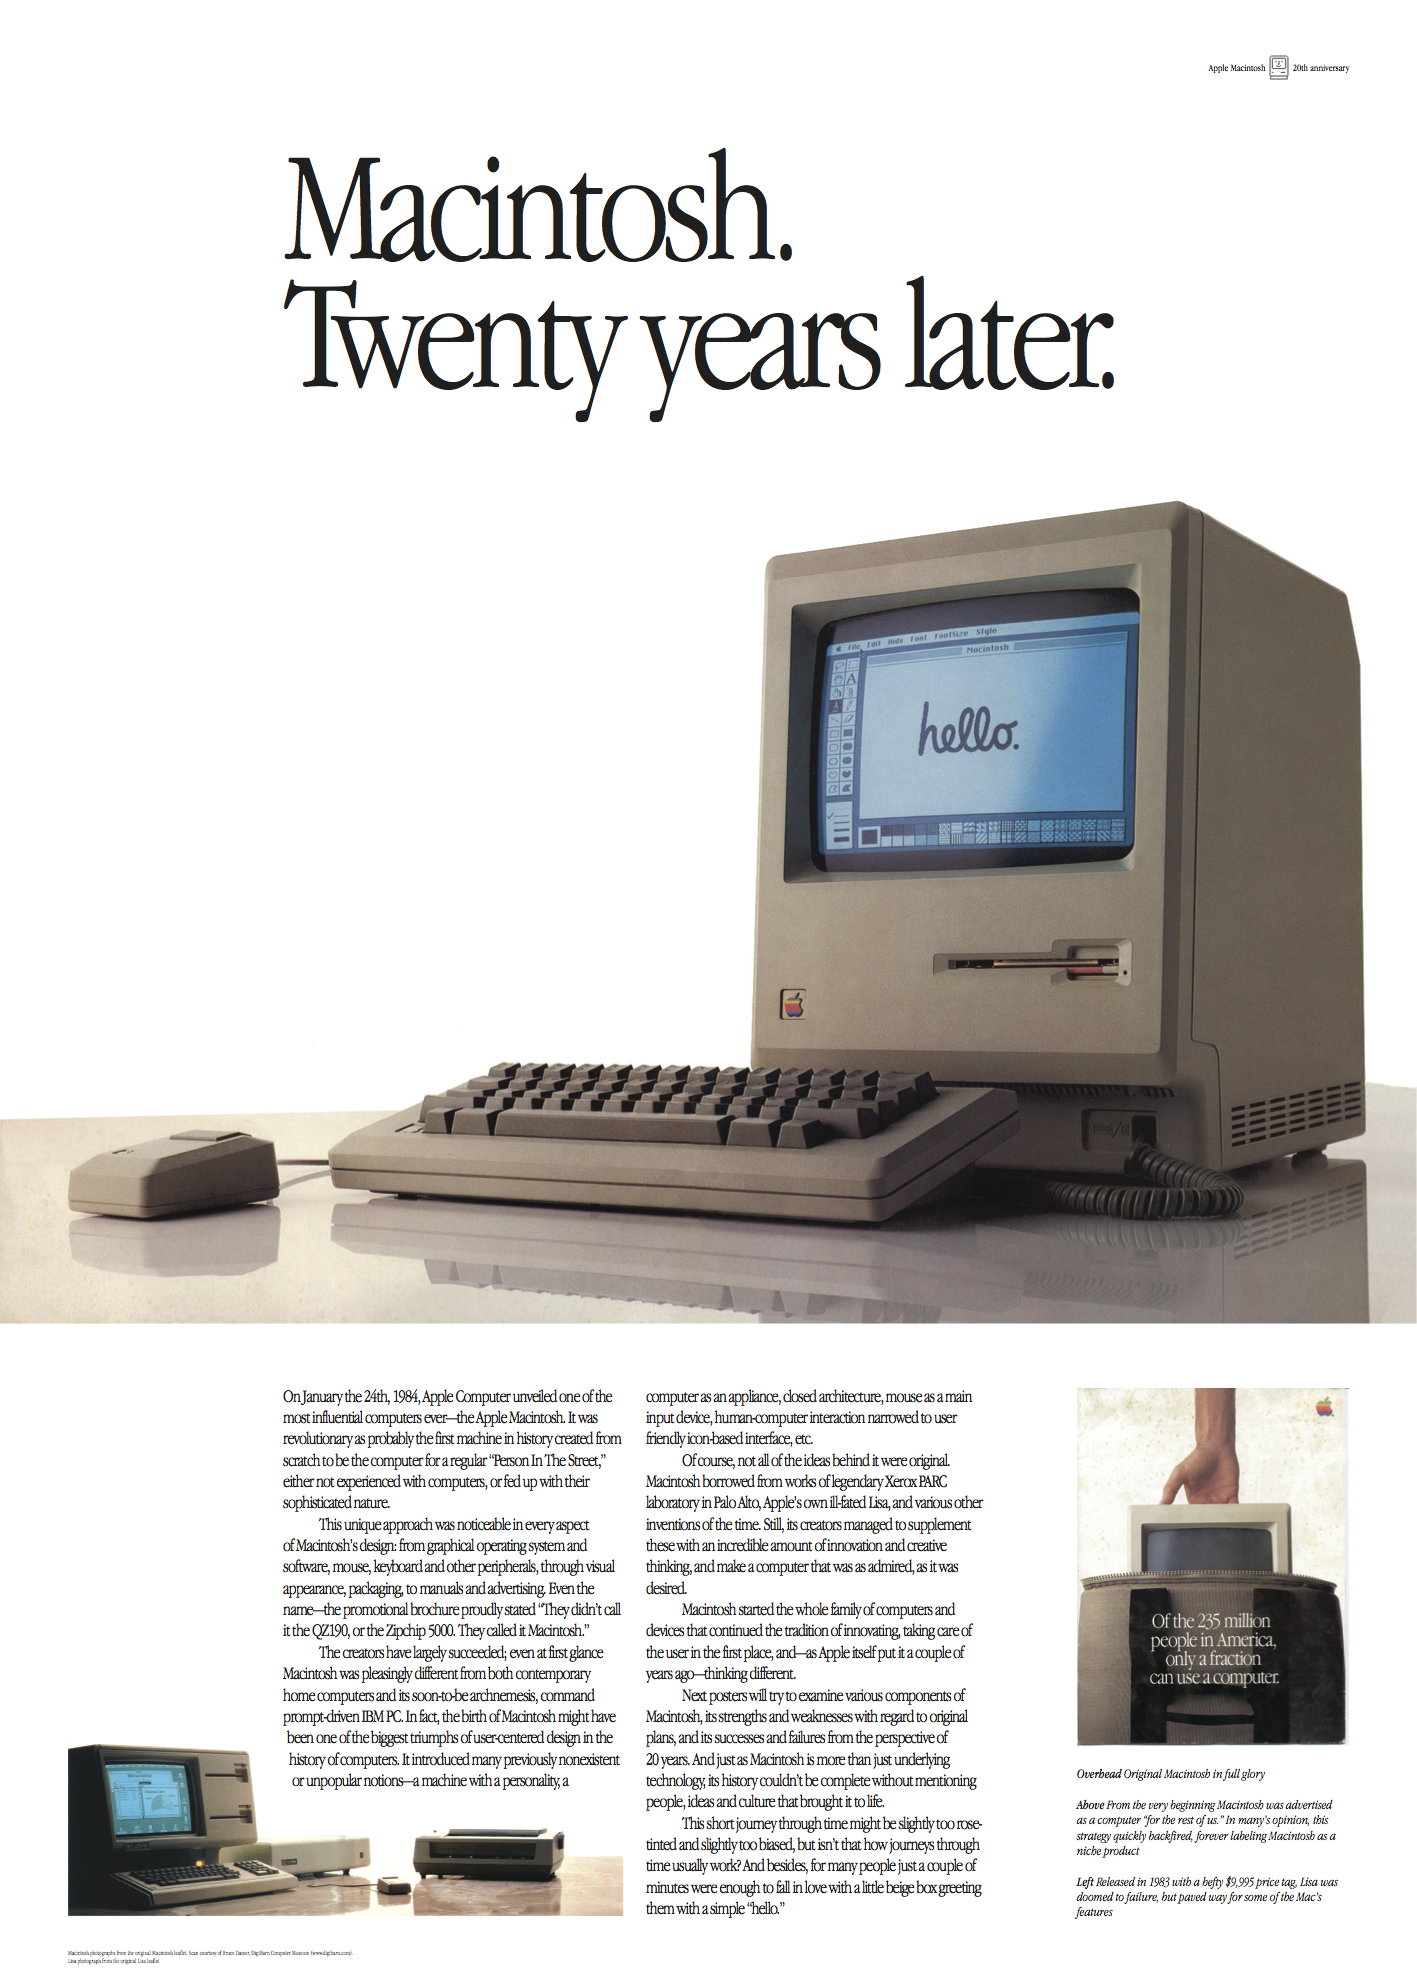 Macintosh. Twenty years later.